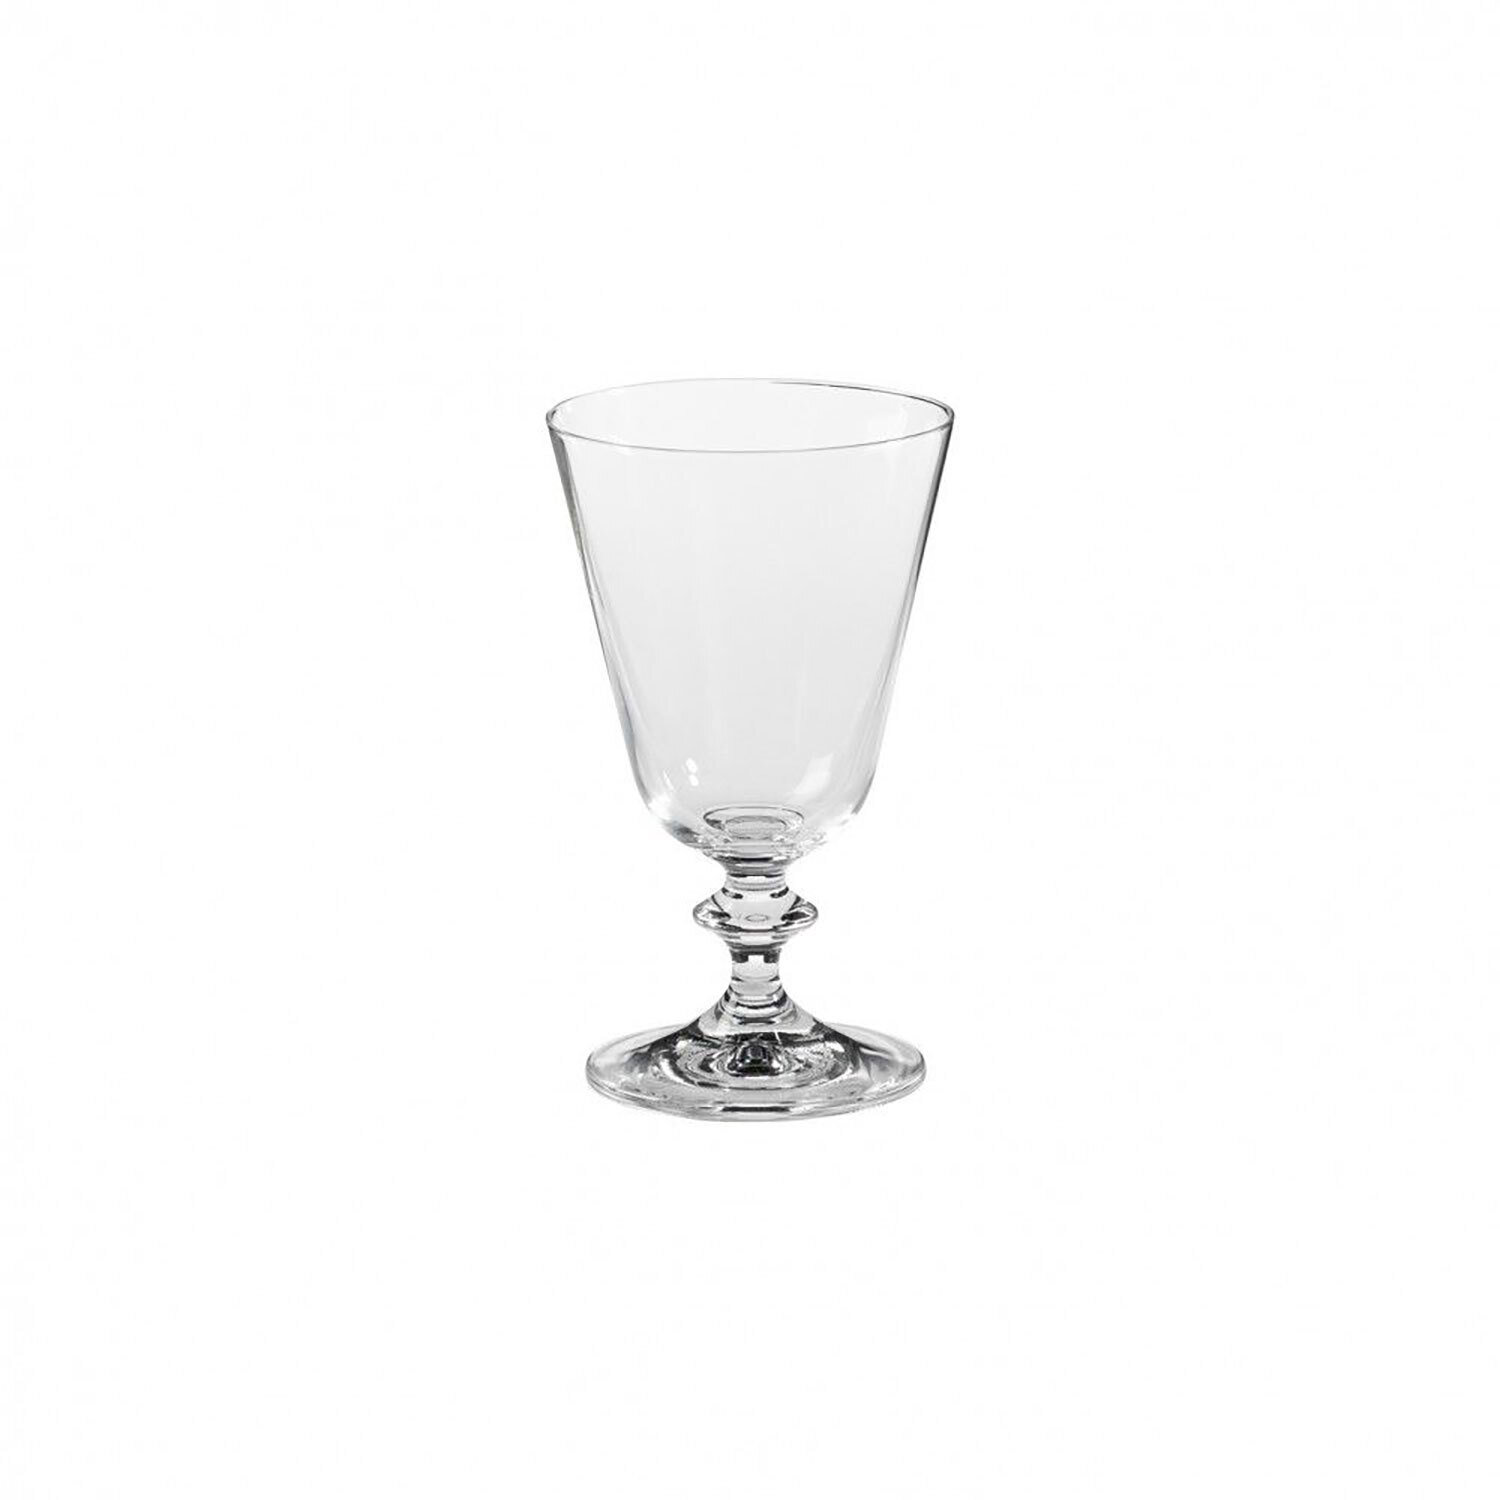 Casafina Riva Clear Wine Glass 9 Oz Set of 6 CFV0079-CLR